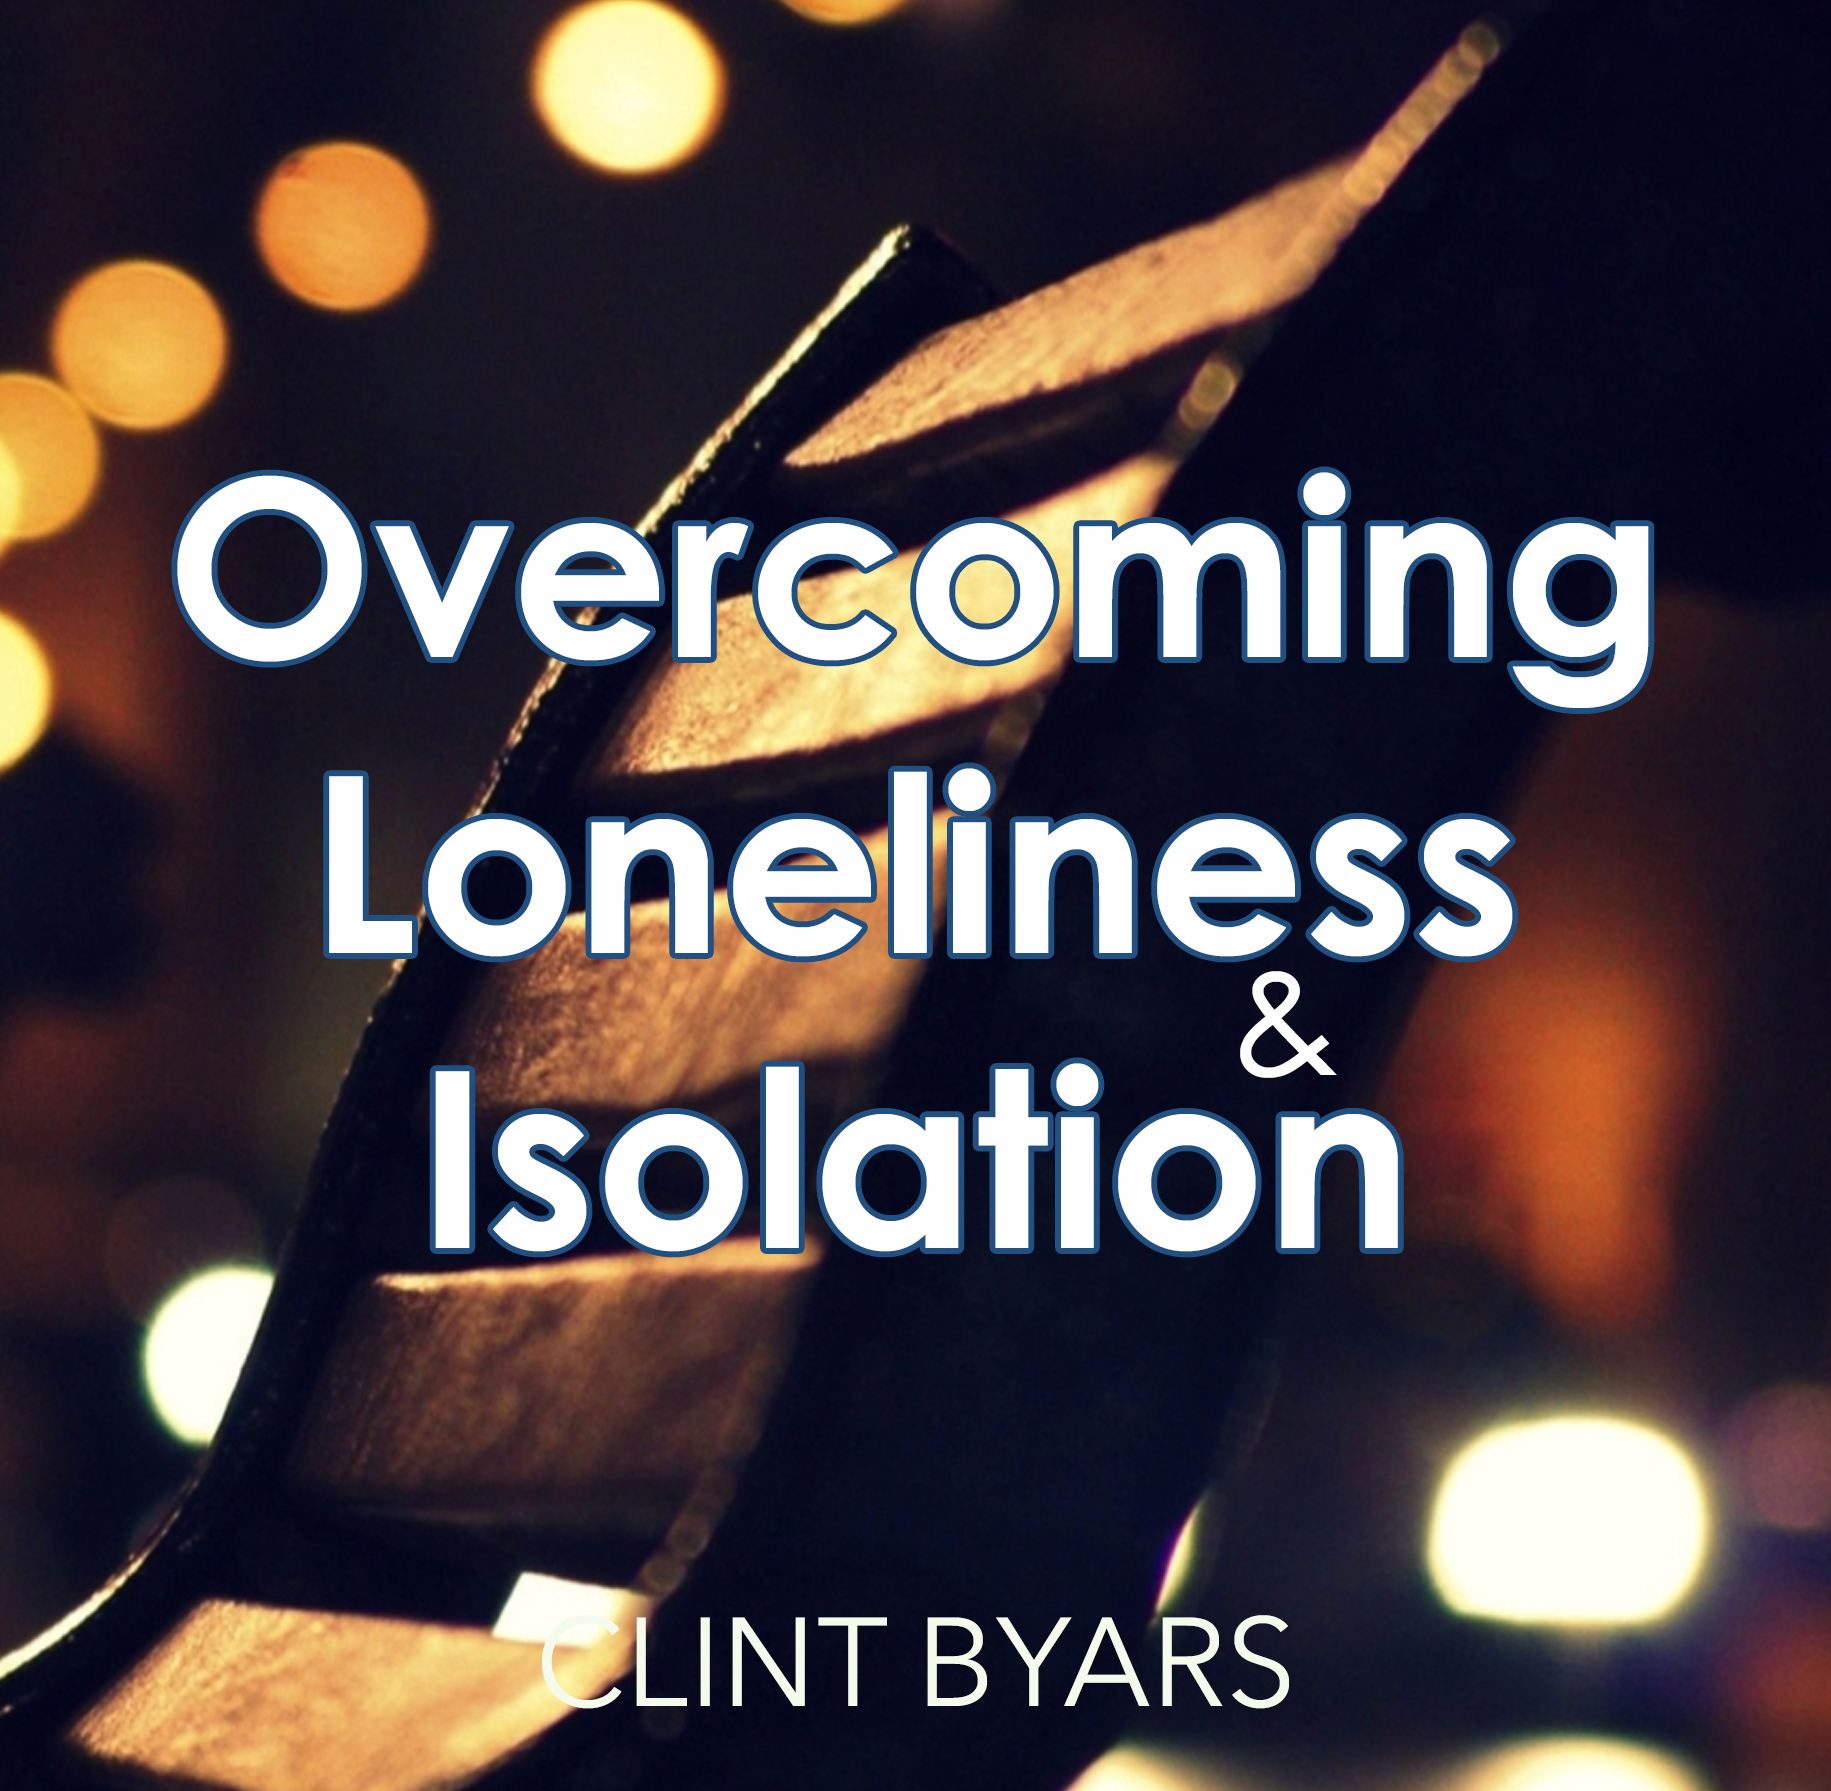 Overcoming Loneliness front.jpg